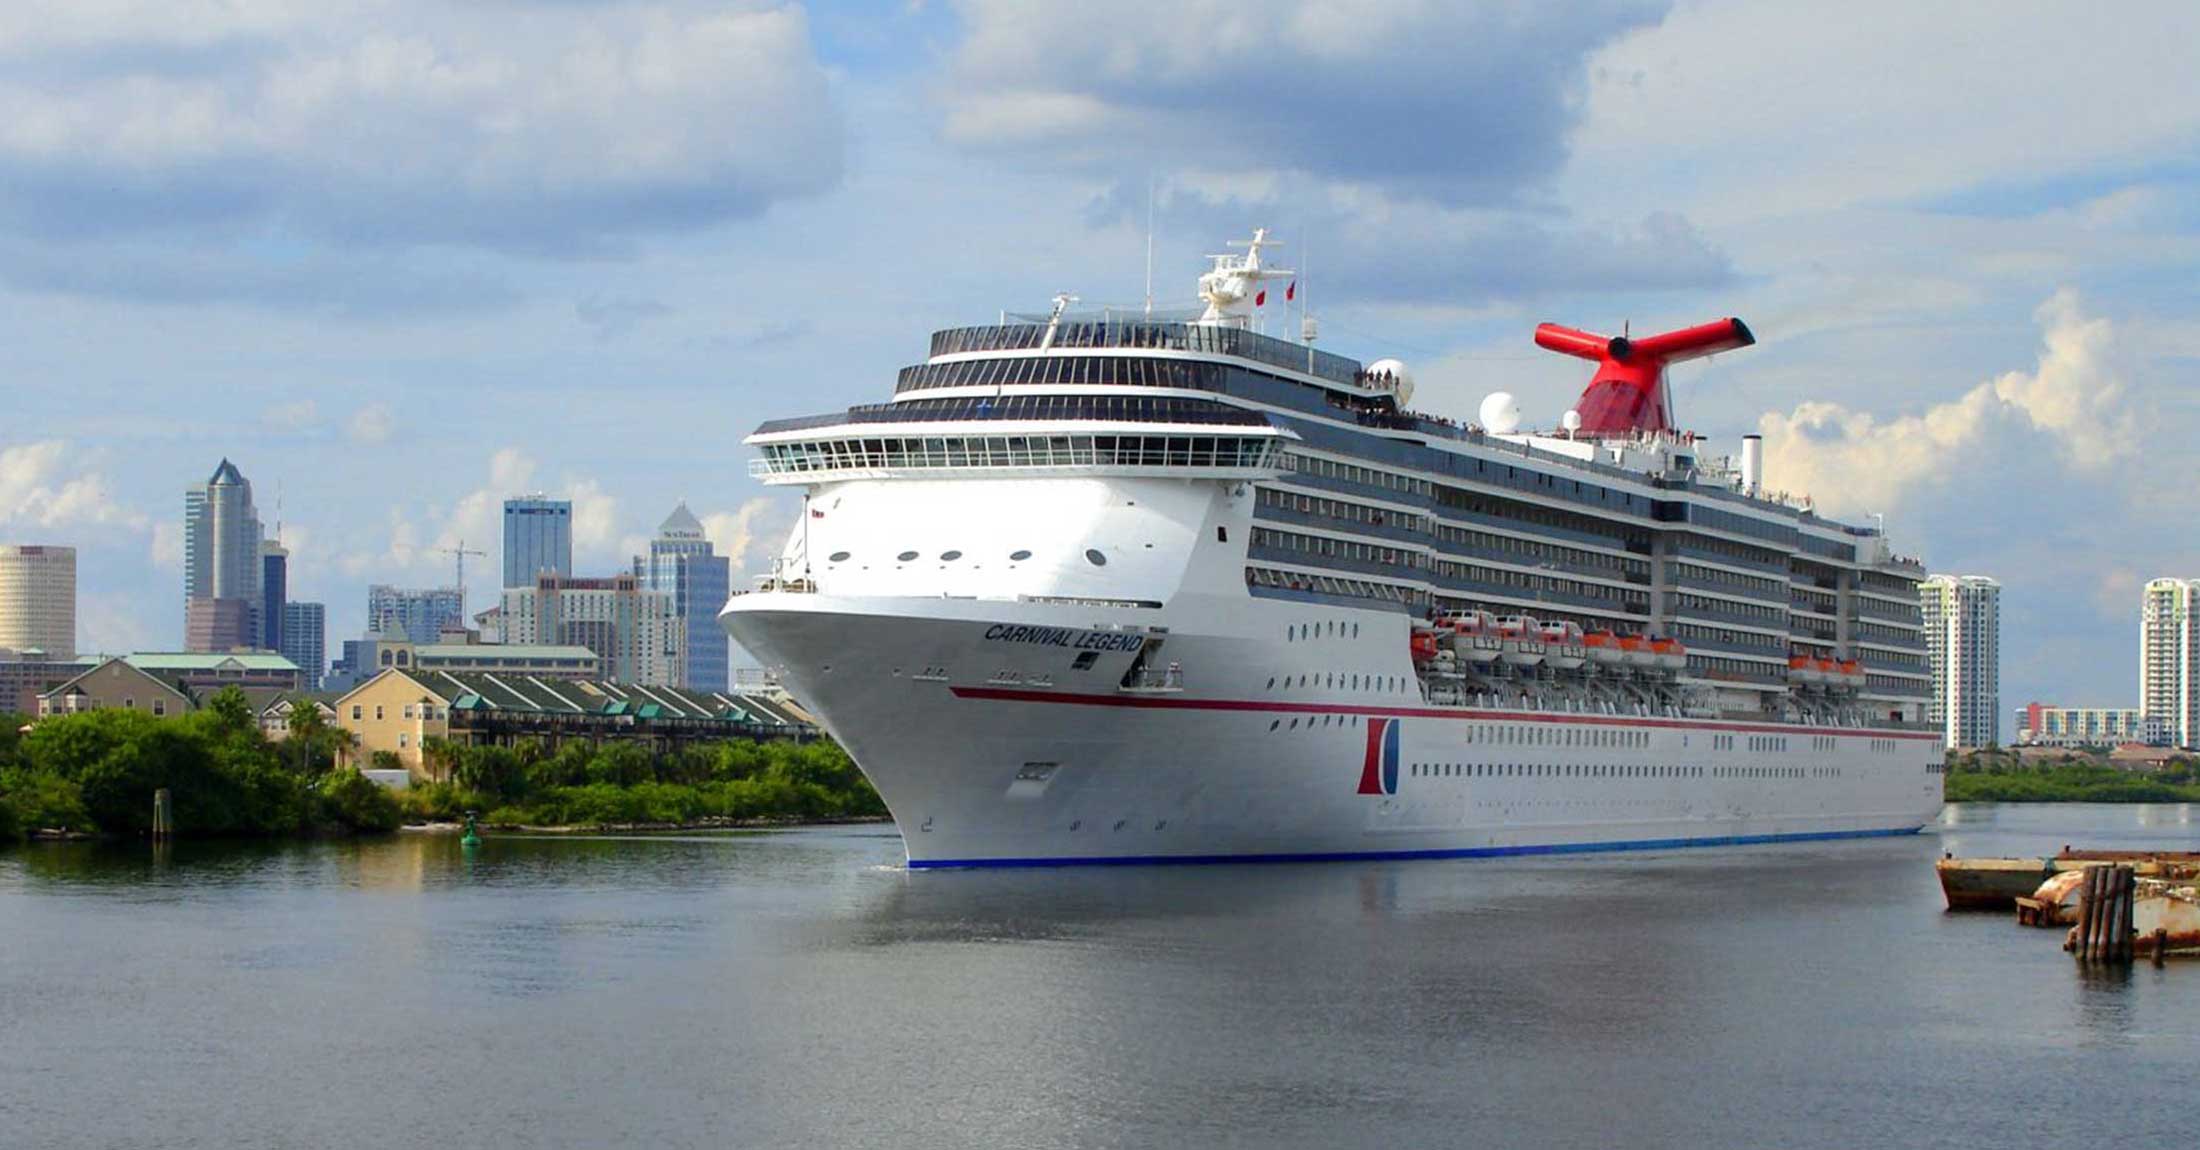 cruise ship in port tampa bay